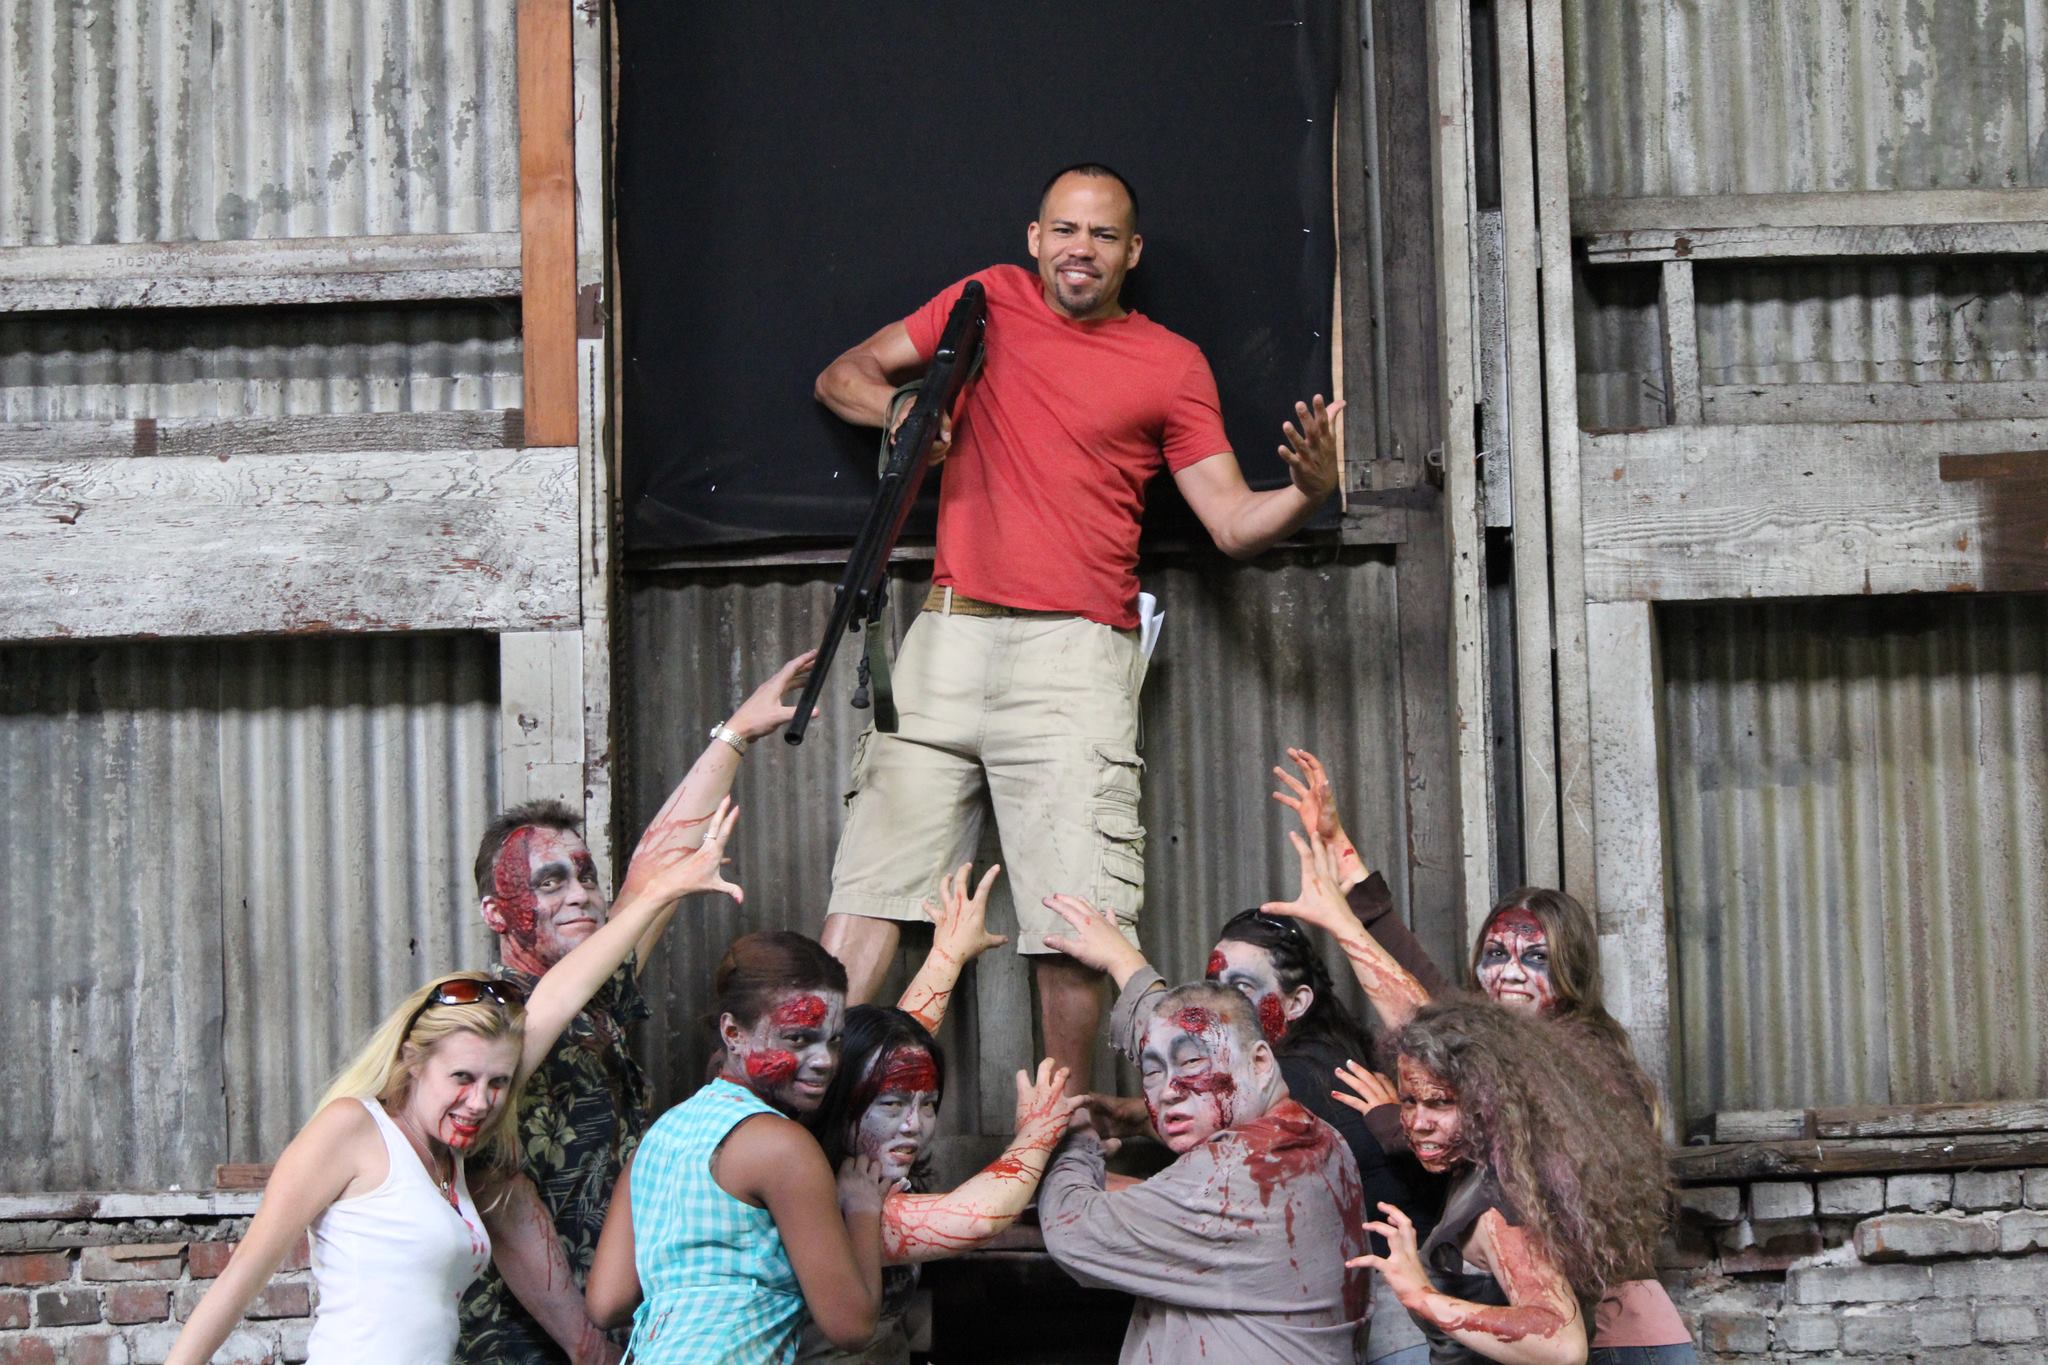 Promo shot for Syfy's Zombie Apocalypse